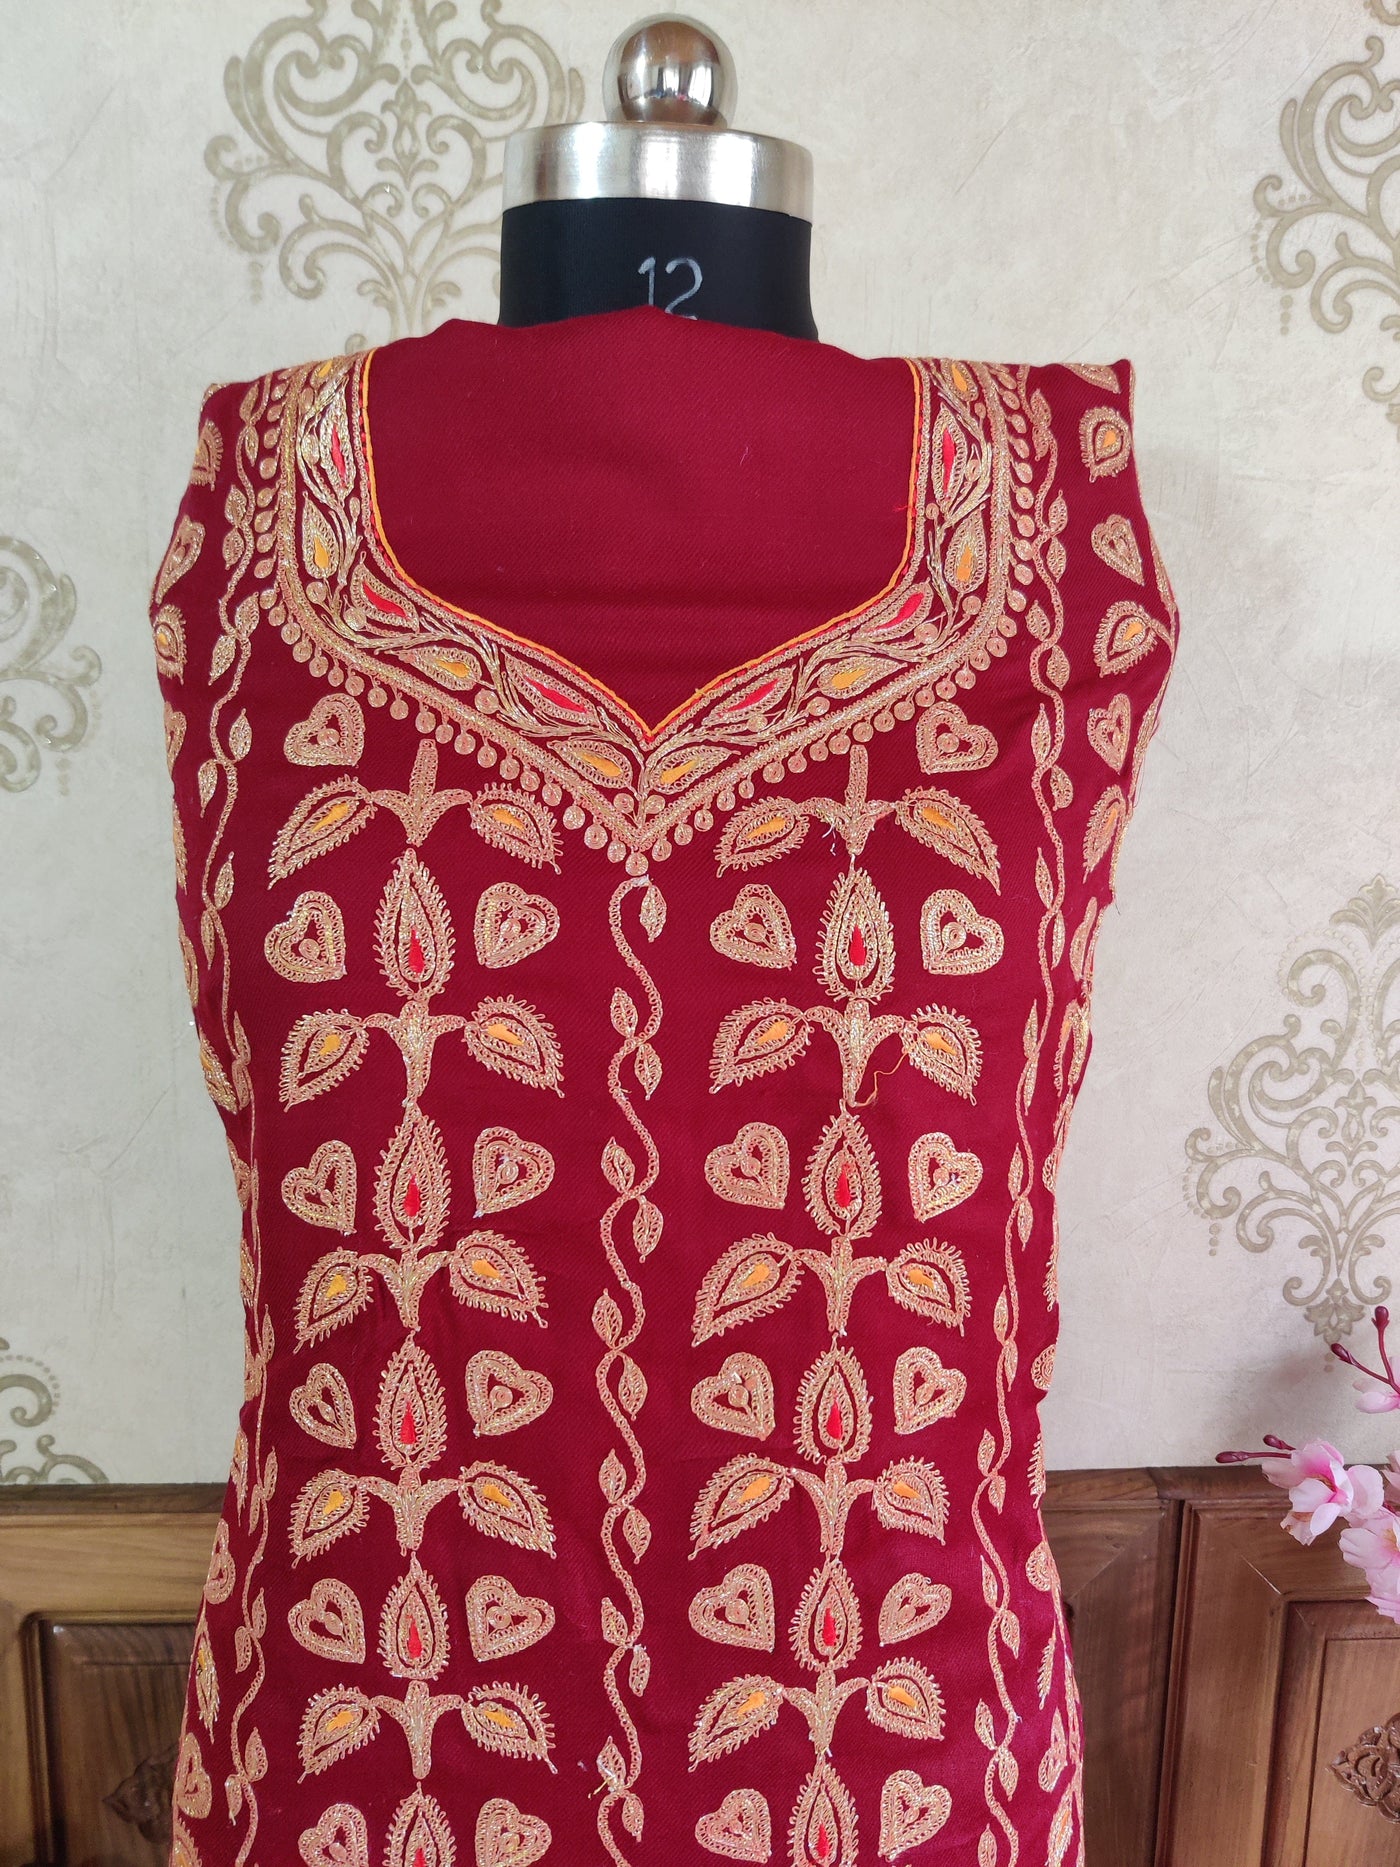 Maroon Kashmiri Woolen Suit With Golden Tilla Embroidery Jaal Design (3 Pcs) Woolen Suit KashmKari Blue Kashmiri Woollen Suit With Tilla Embroidery jaal design (3 pcs).  Kashmiri Suit online